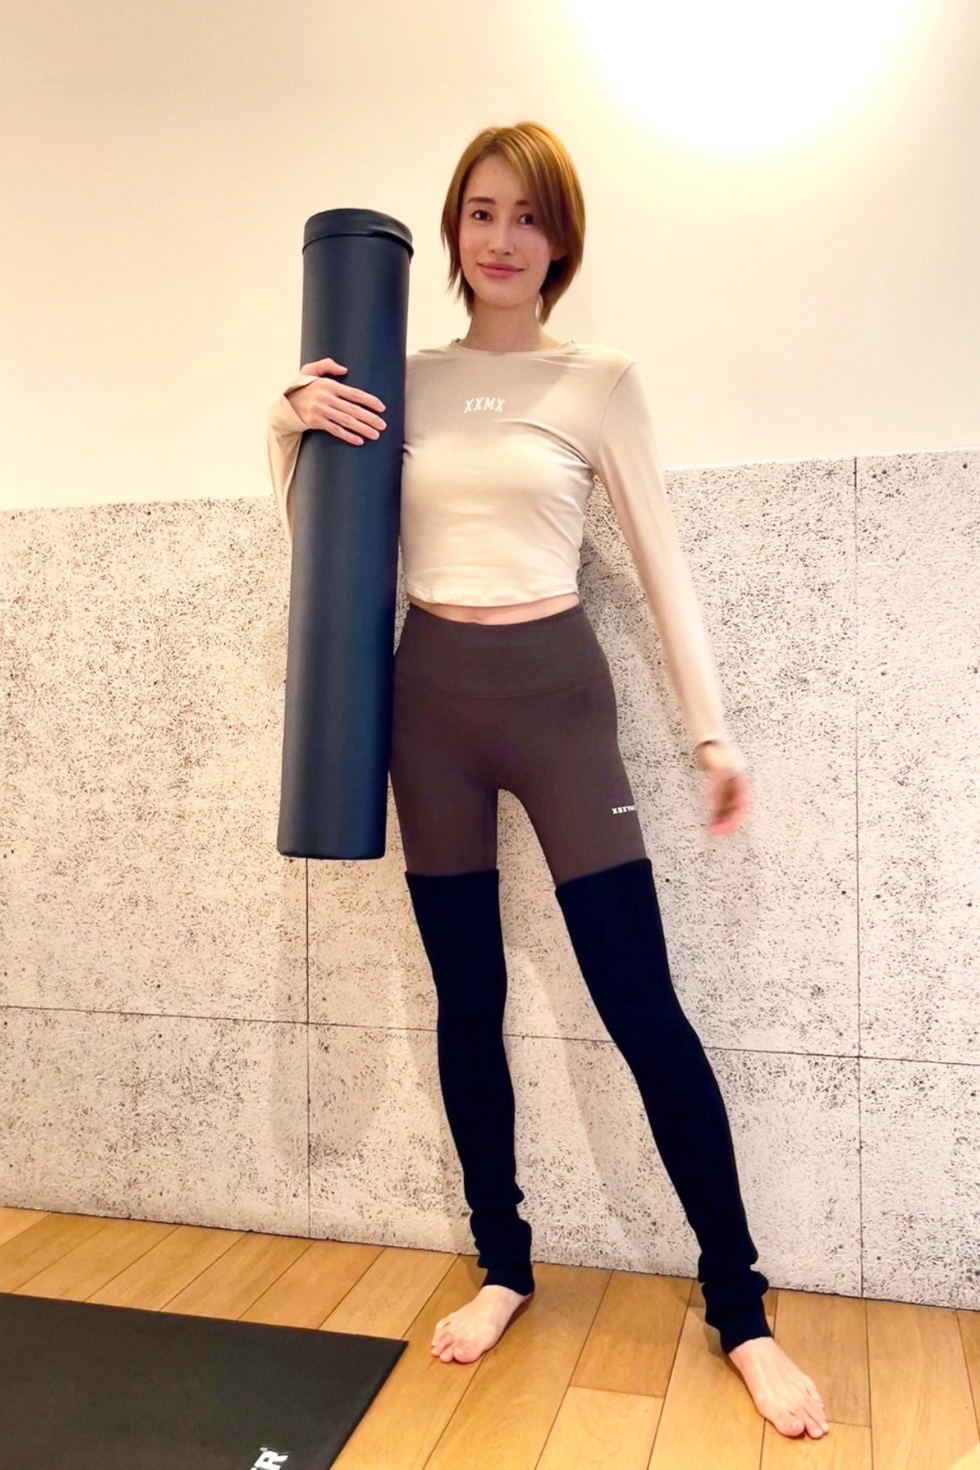 a woman holding a black pole